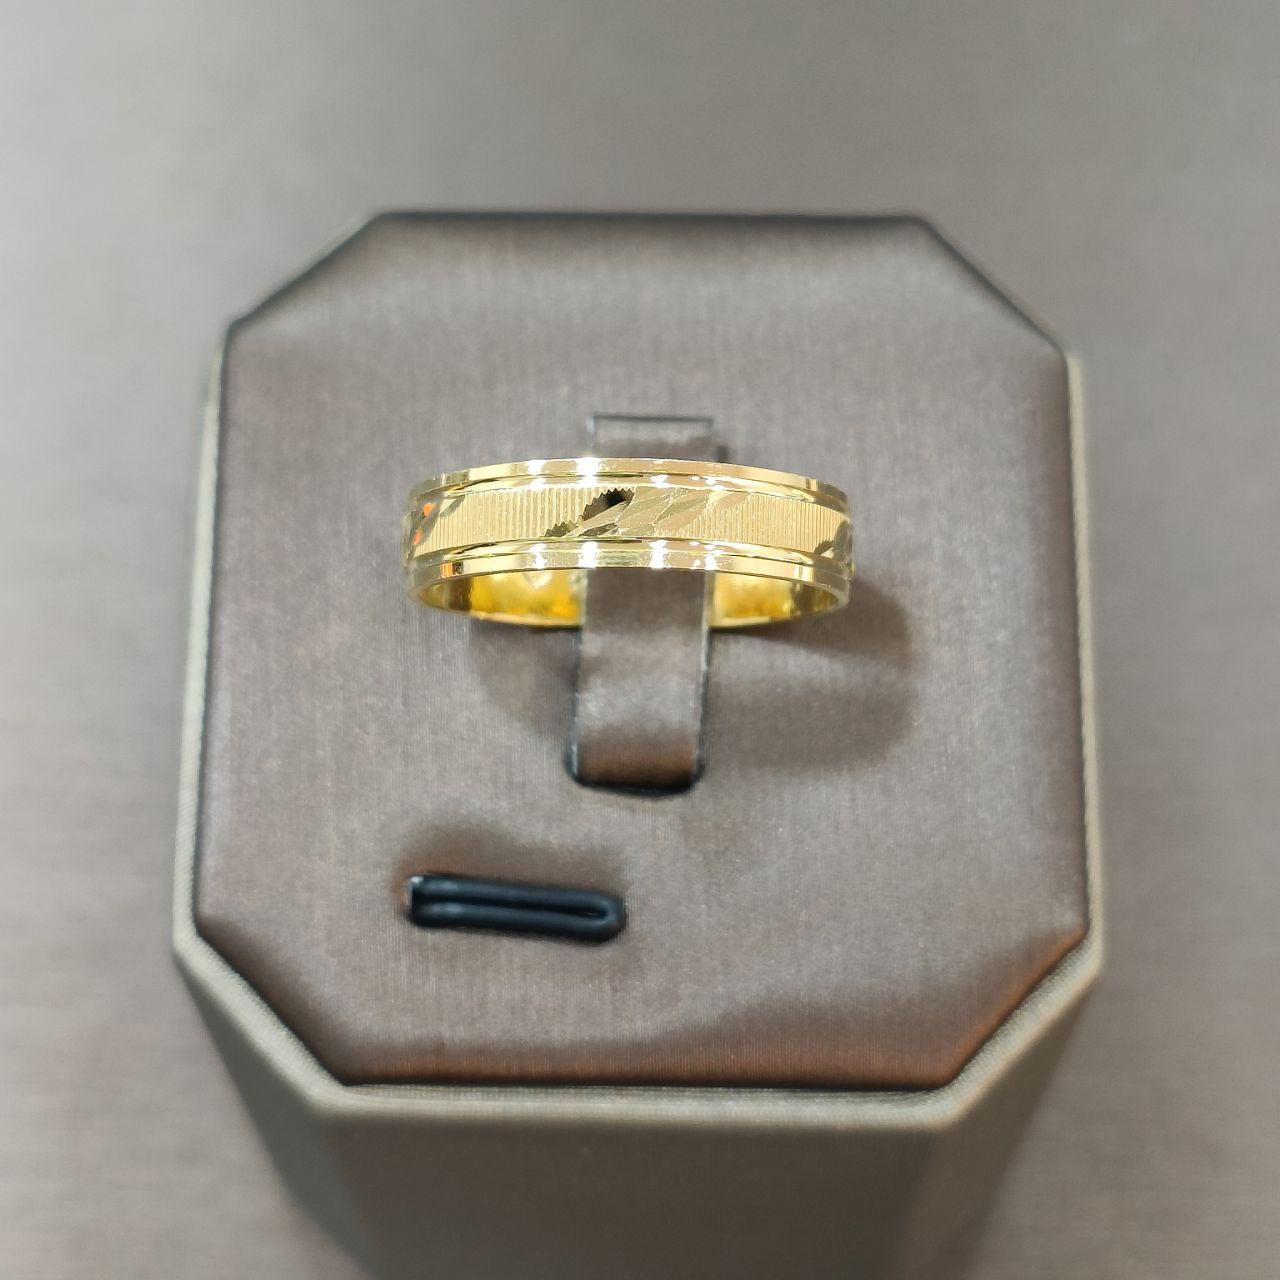 22k / 916 Gold Cutting Band Ring V1-916 gold-Best Gold Shop